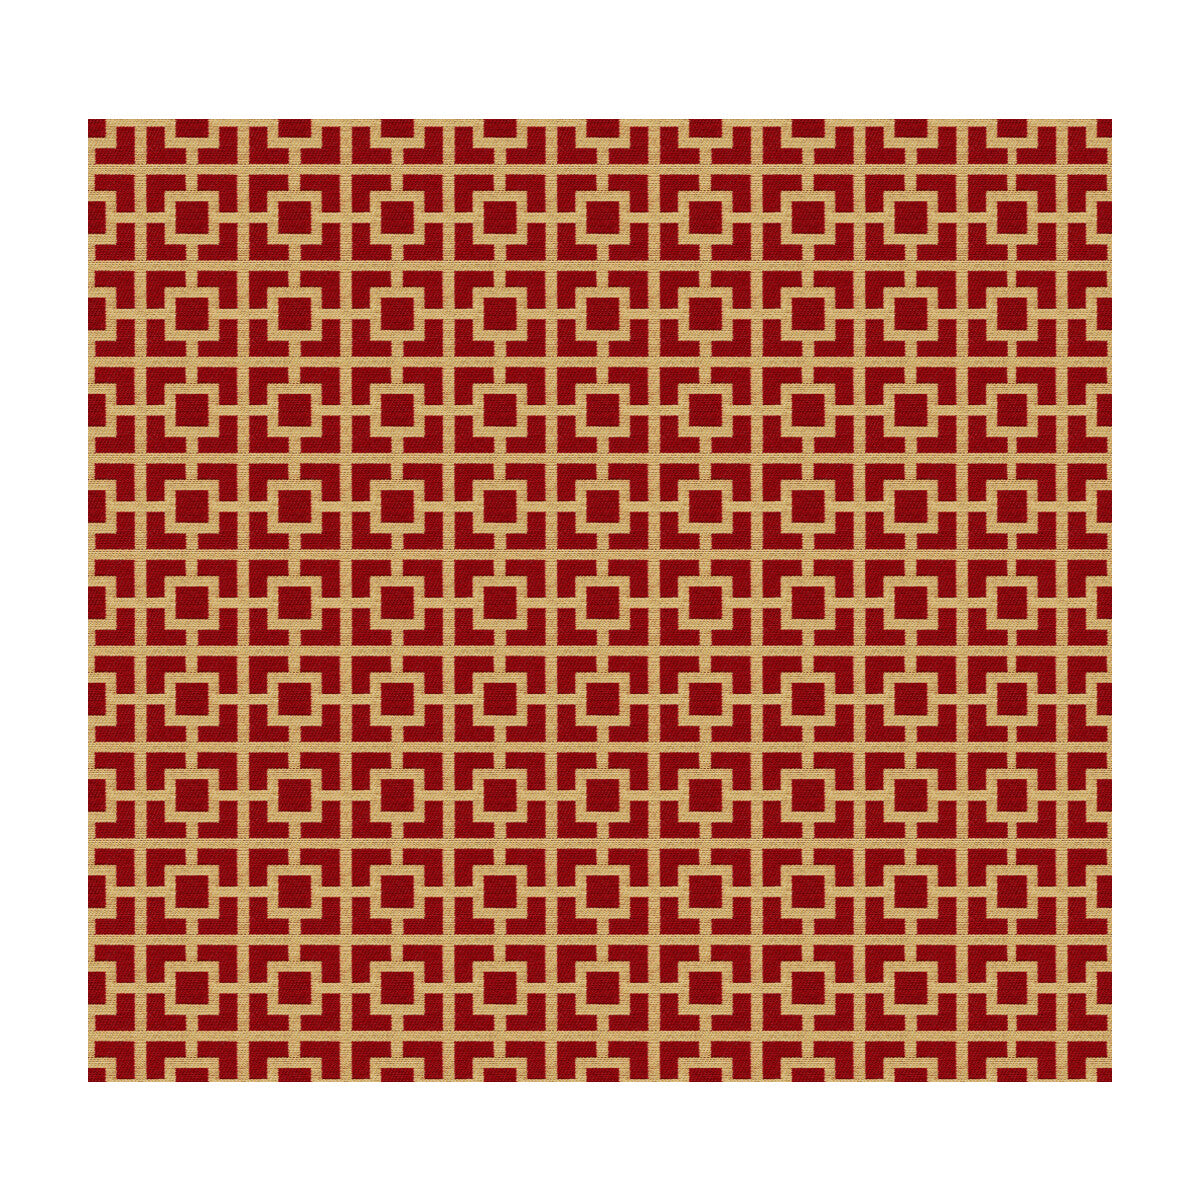 Kravet Smart fabric in 28120-916 color - pattern 28120.916.0 - by Kravet Smart